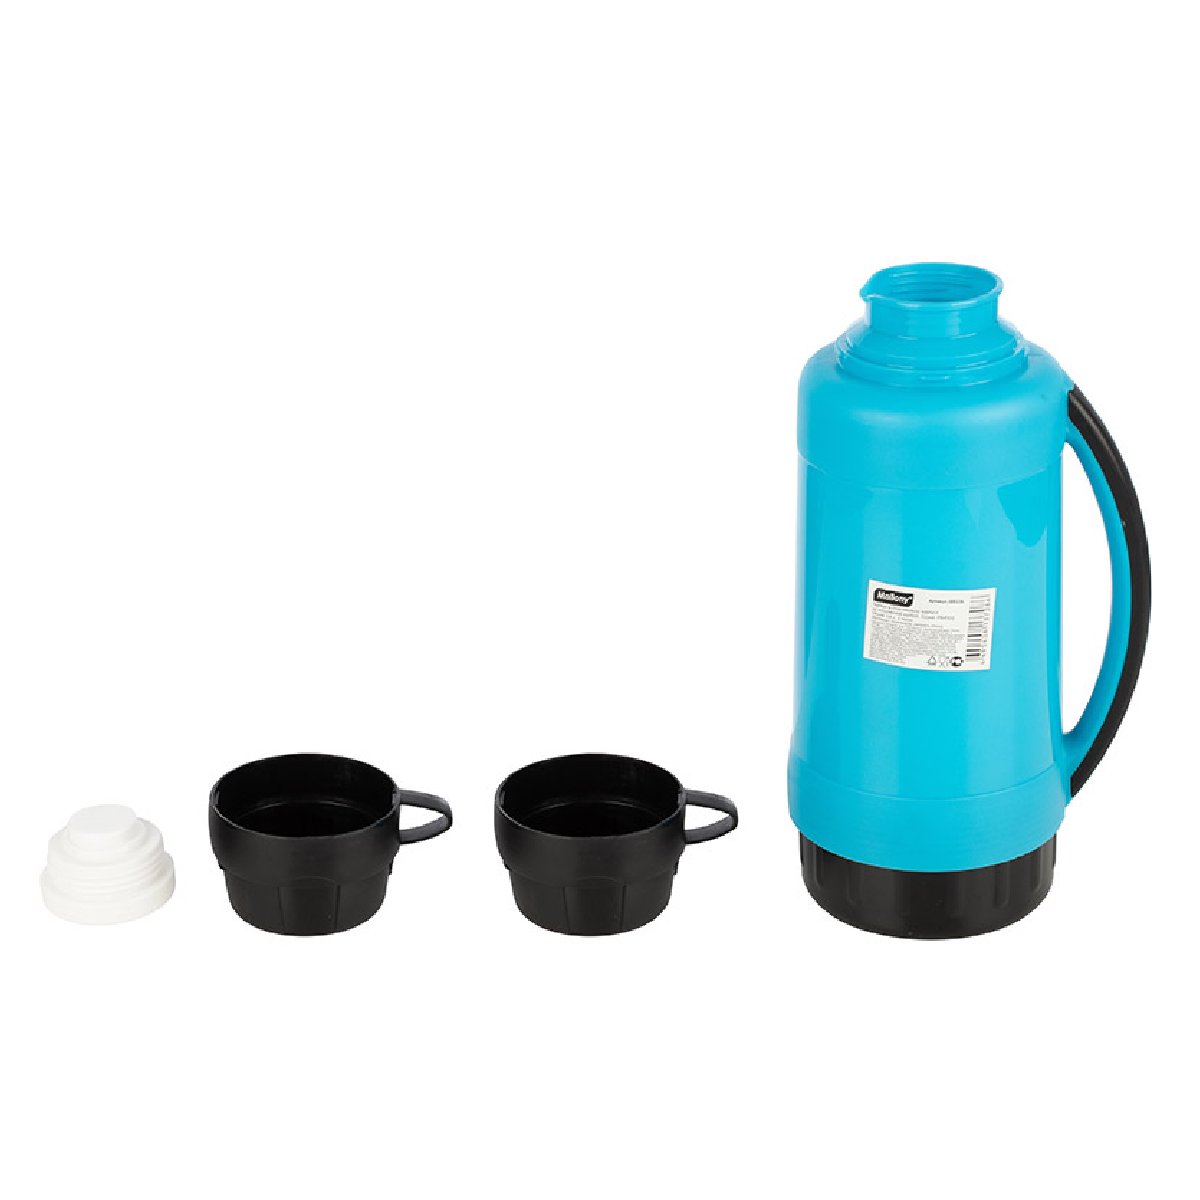 Термос в пластик корп, стеклянная колба, 1,8 л, 2 чашки, серия PRATICO, тм Mallony (005536)